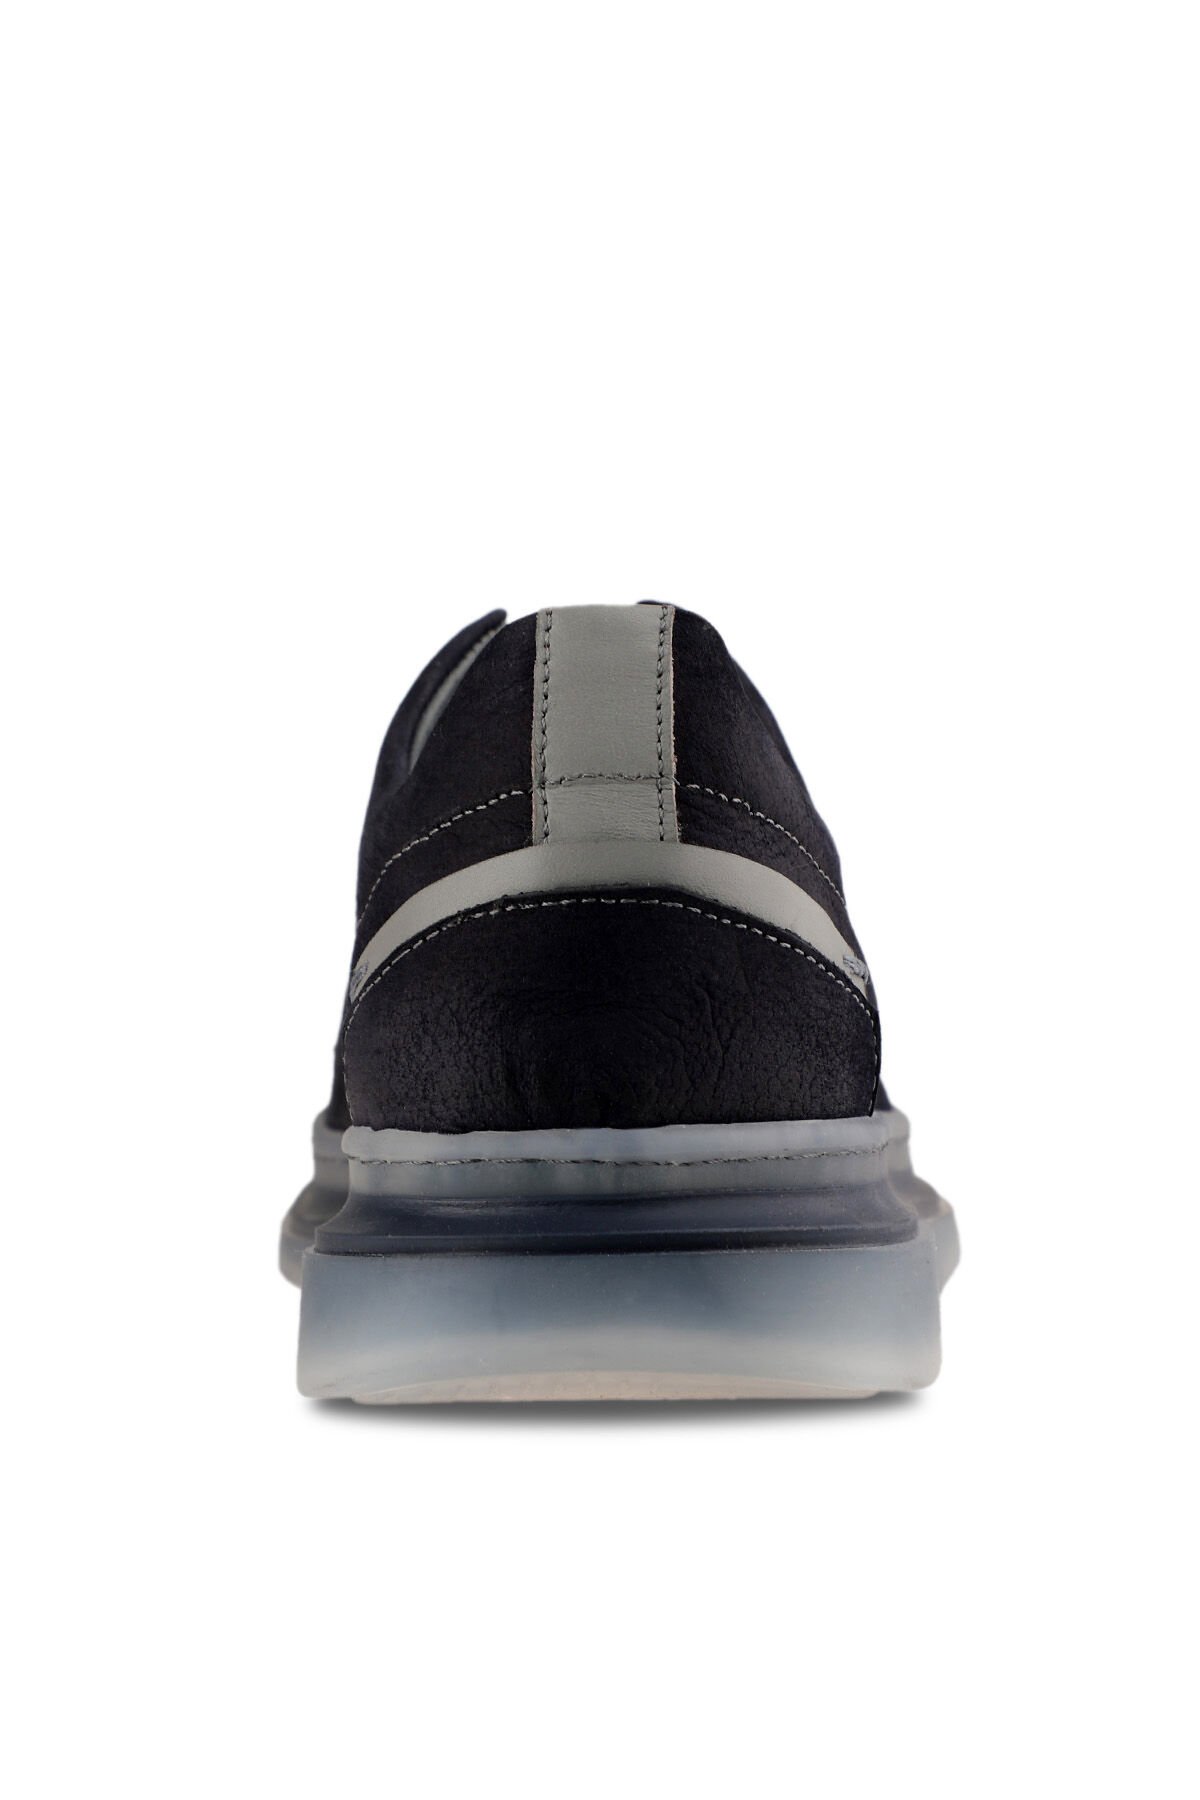 Slazenger GALAXY Sneaker Erkek Ayakkabı Lacivert Nubuk - Thumbnail